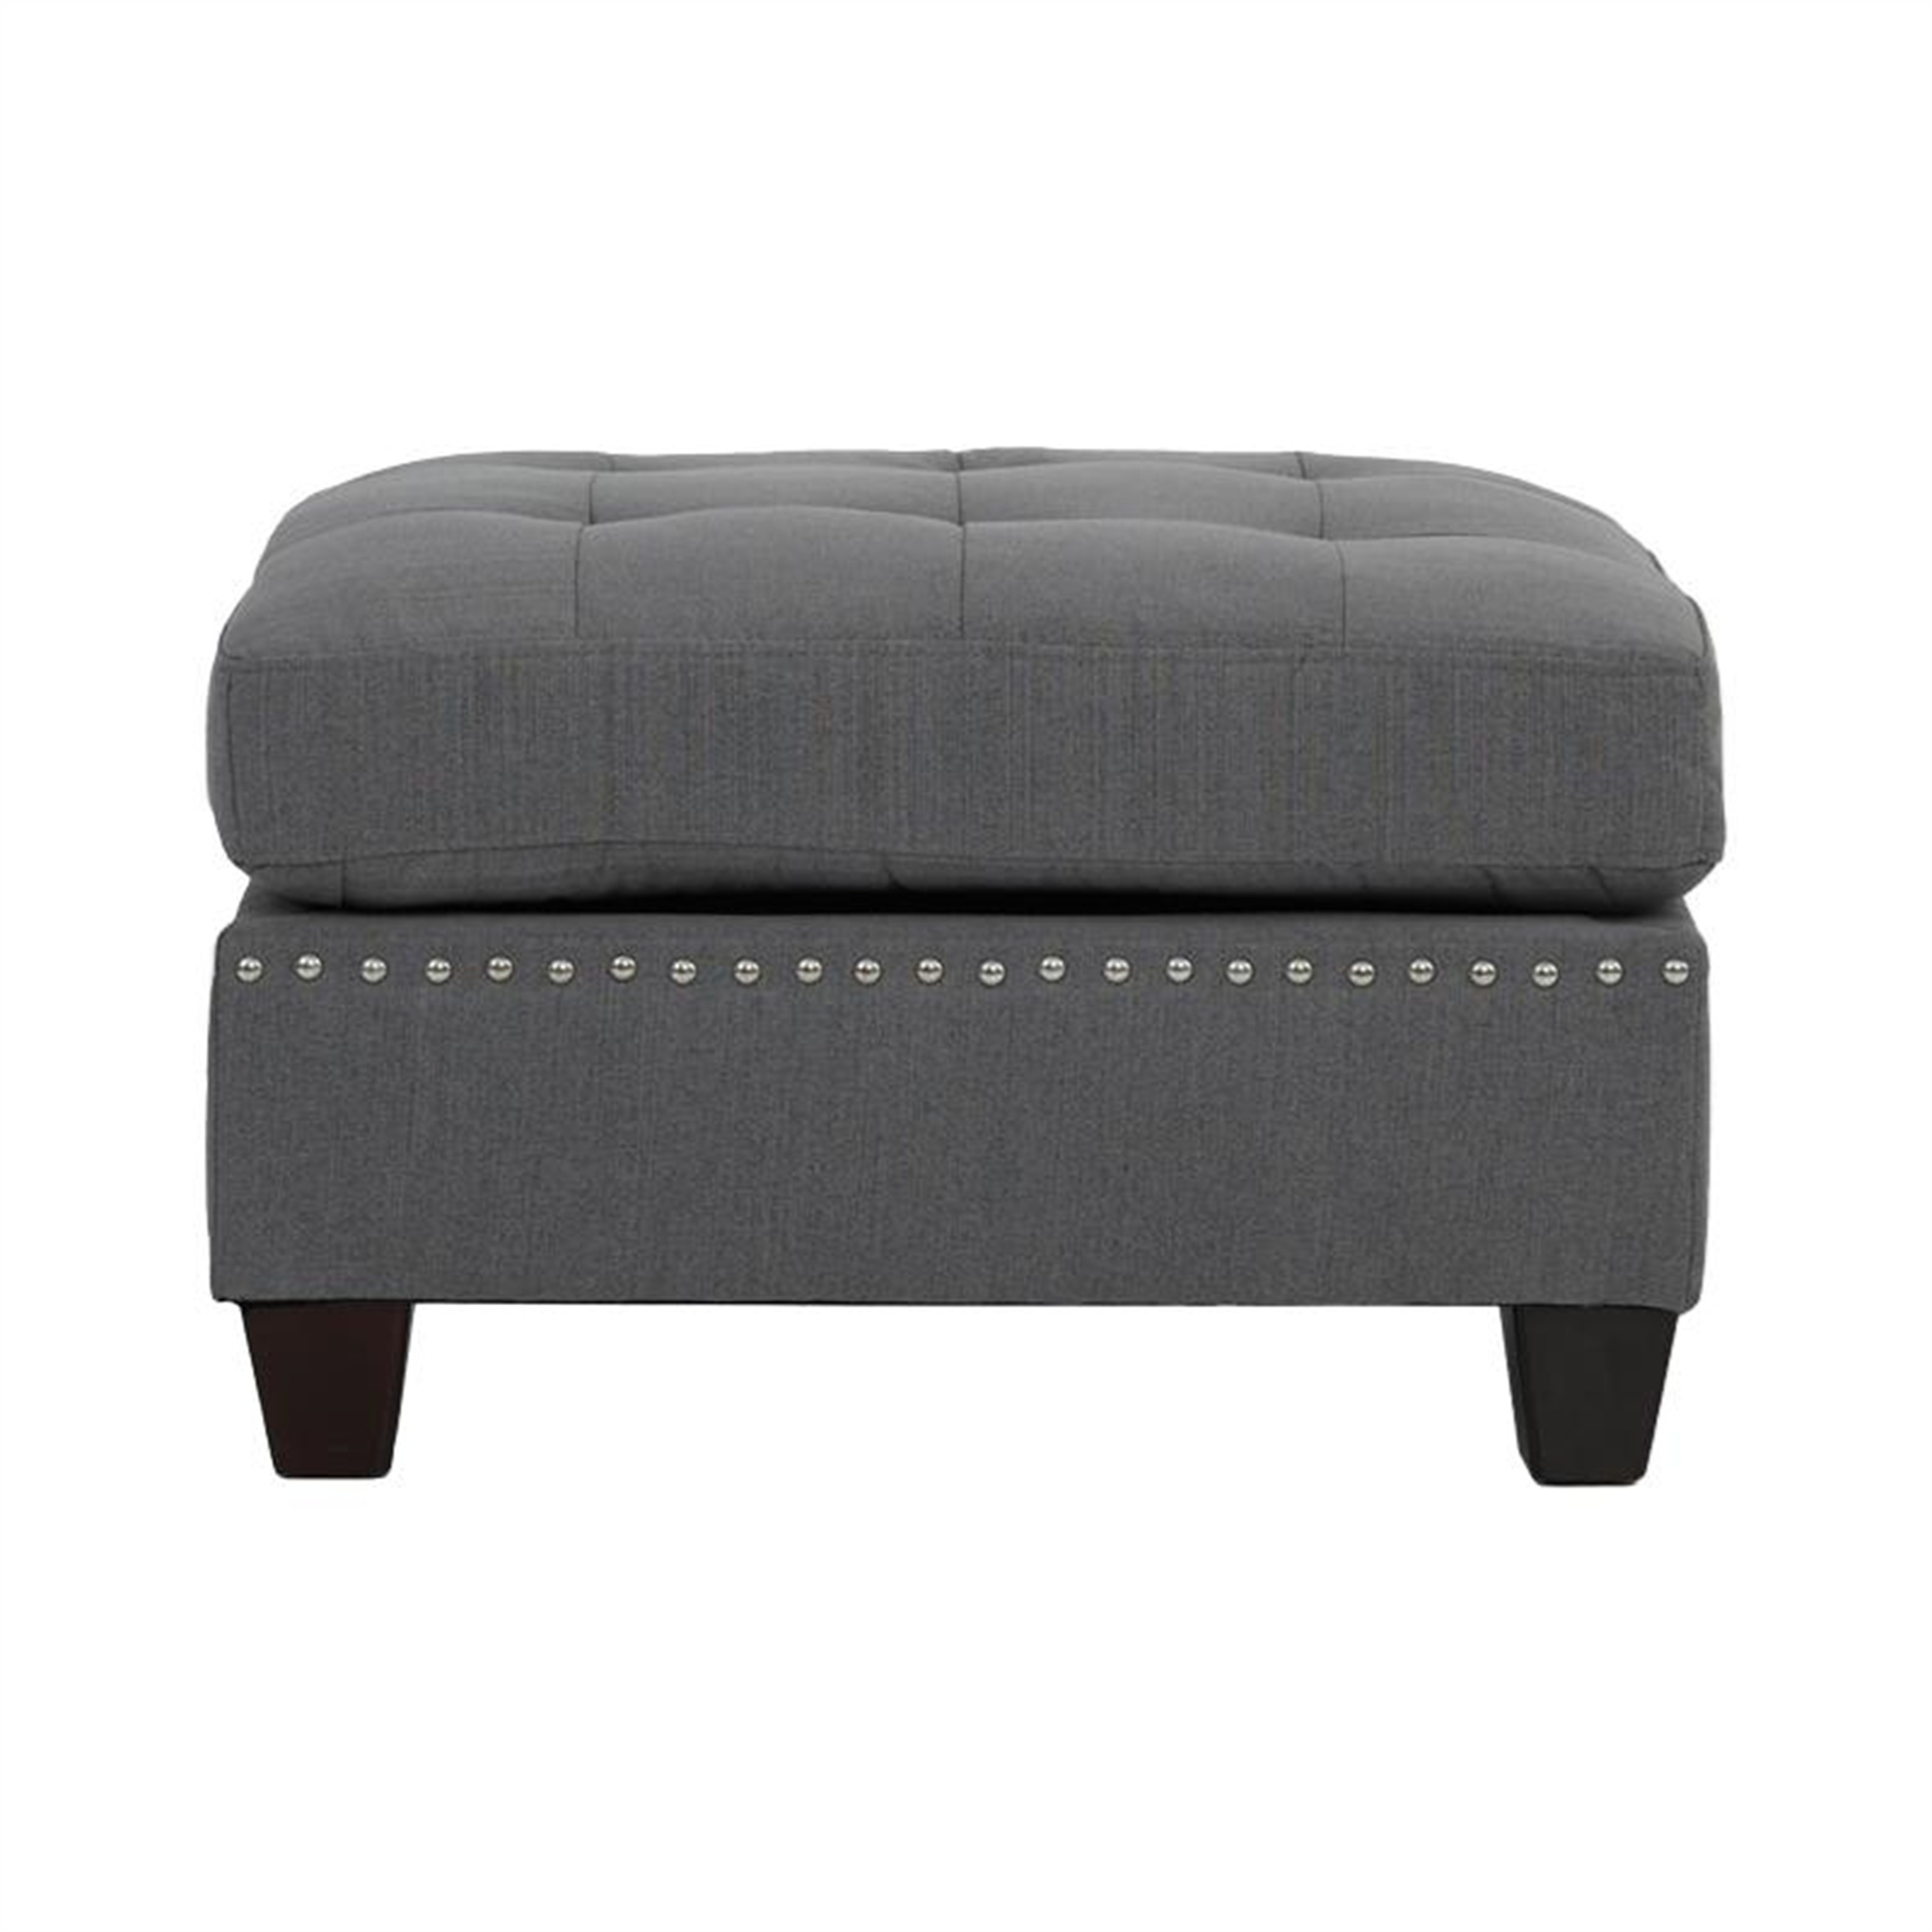 

Living Room Furniture Tufted Ottoman Grey Linen Like Fabric 1pc Ottoman Cushion Nail Heads Wooden Legs